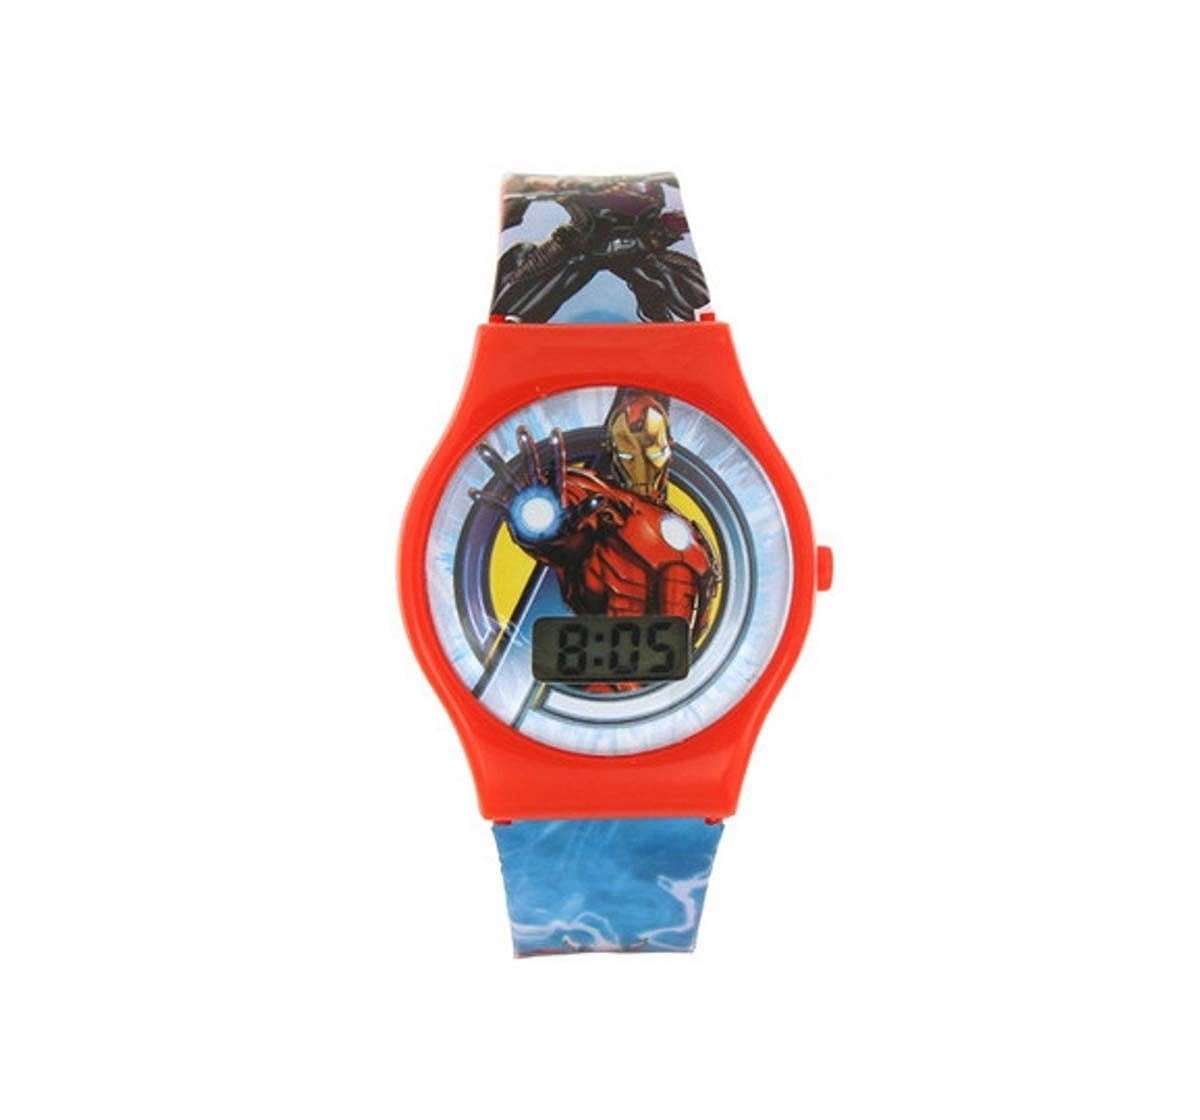 Avengers Marvel Digital Wrist Watch - Red Novelty for Kids age 5Y+